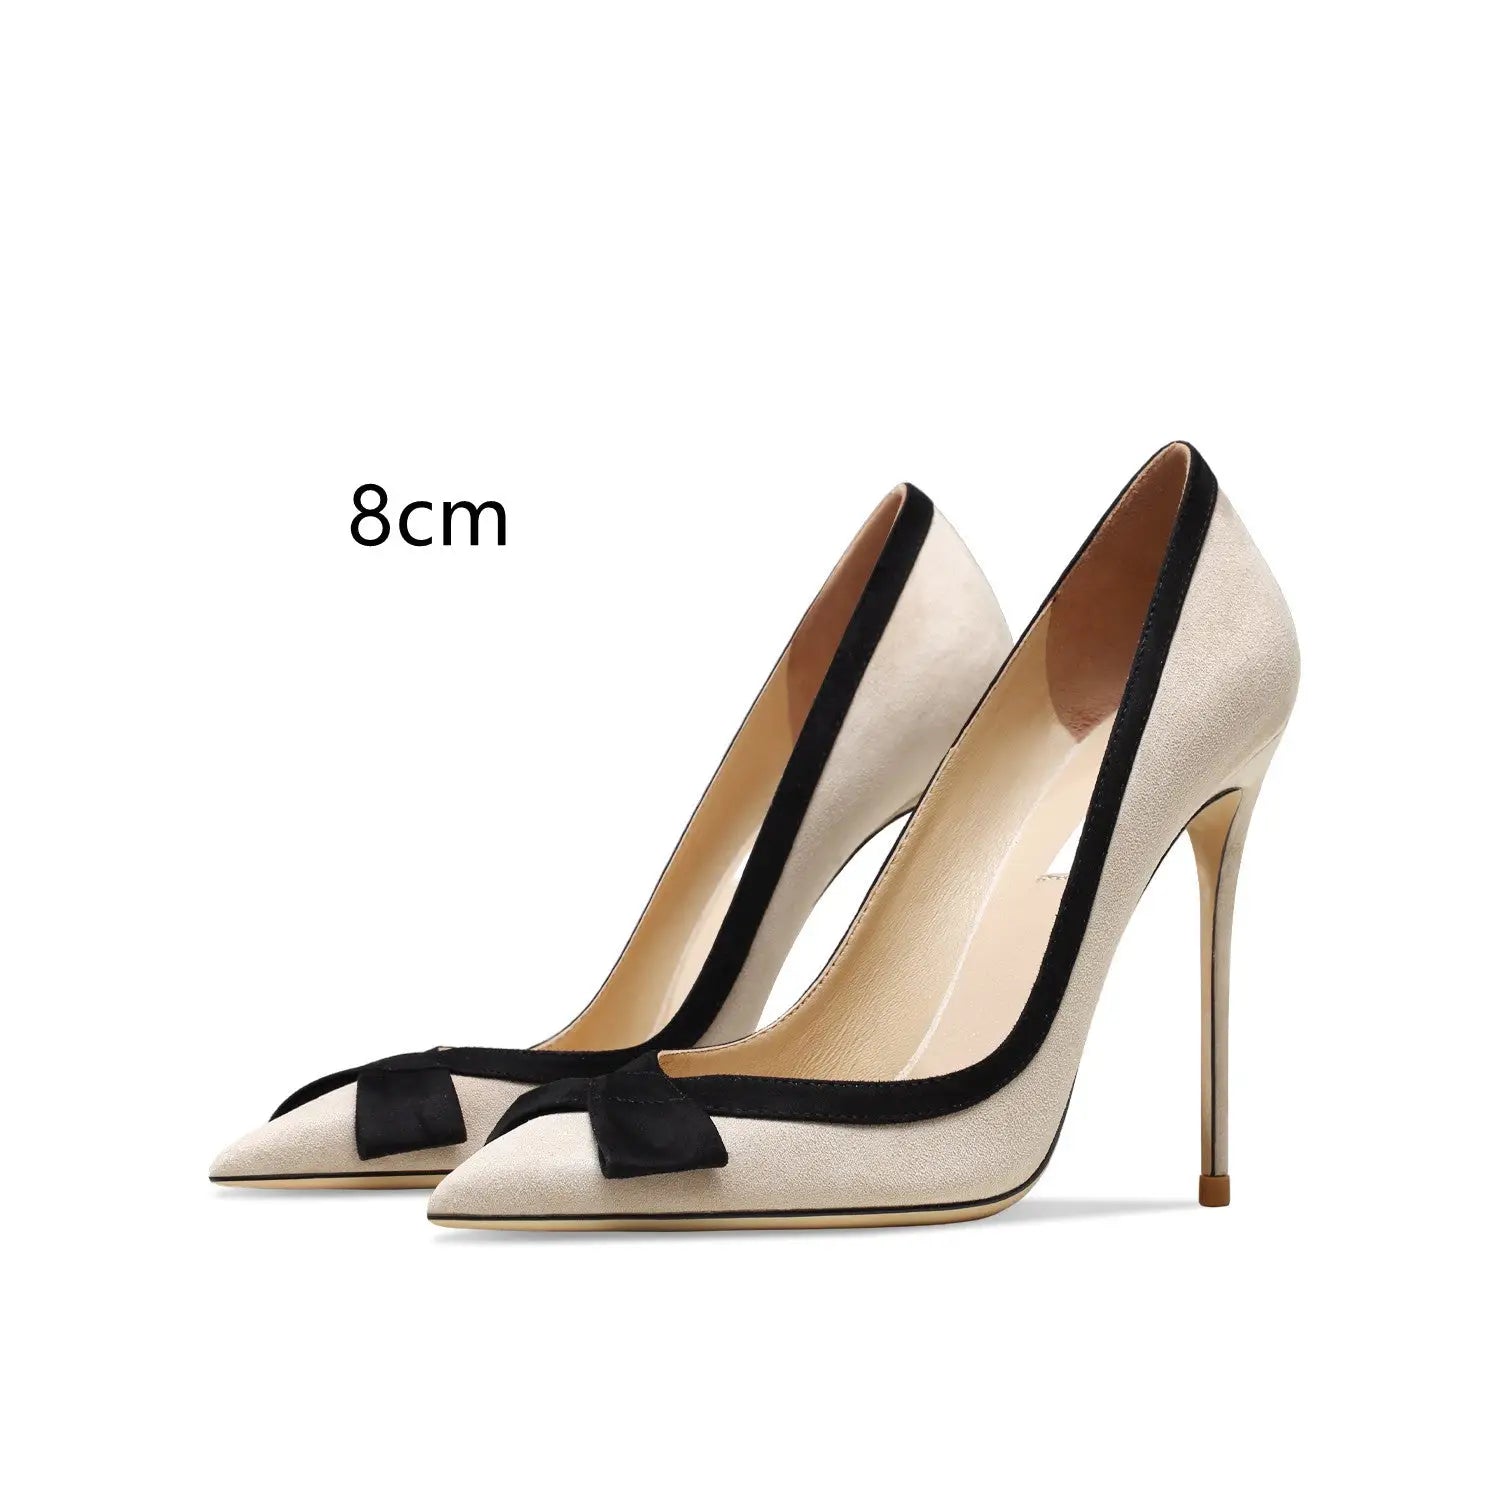 Perfect leather stiletto high heels - apricot / cashmere 8cm / 33 - pumps